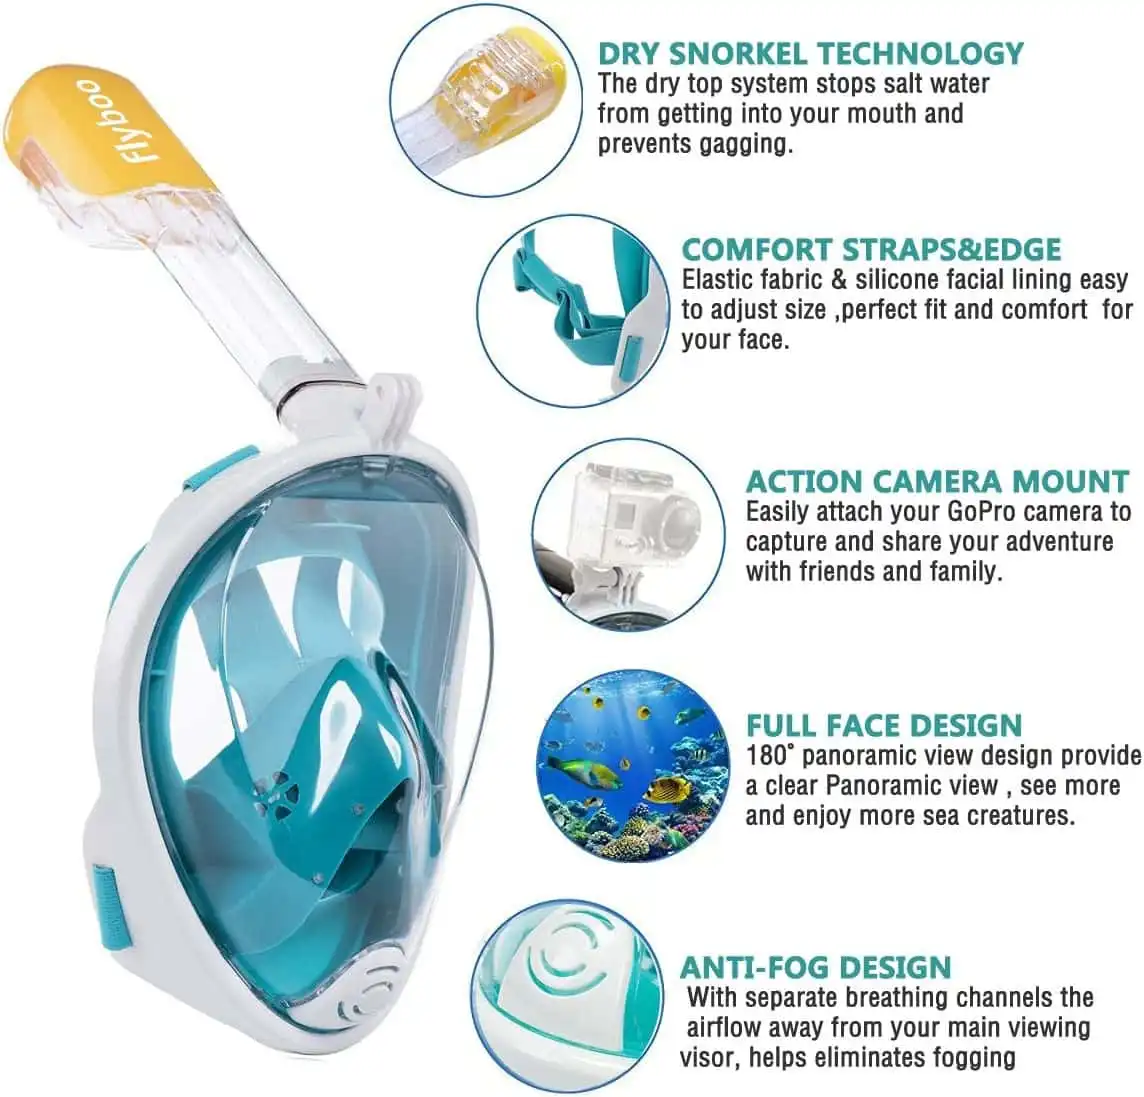 BLUUXIN Diving Mask Snorkeling Mask Full Face Mask,180 Degree View Panoramic Full Face Design